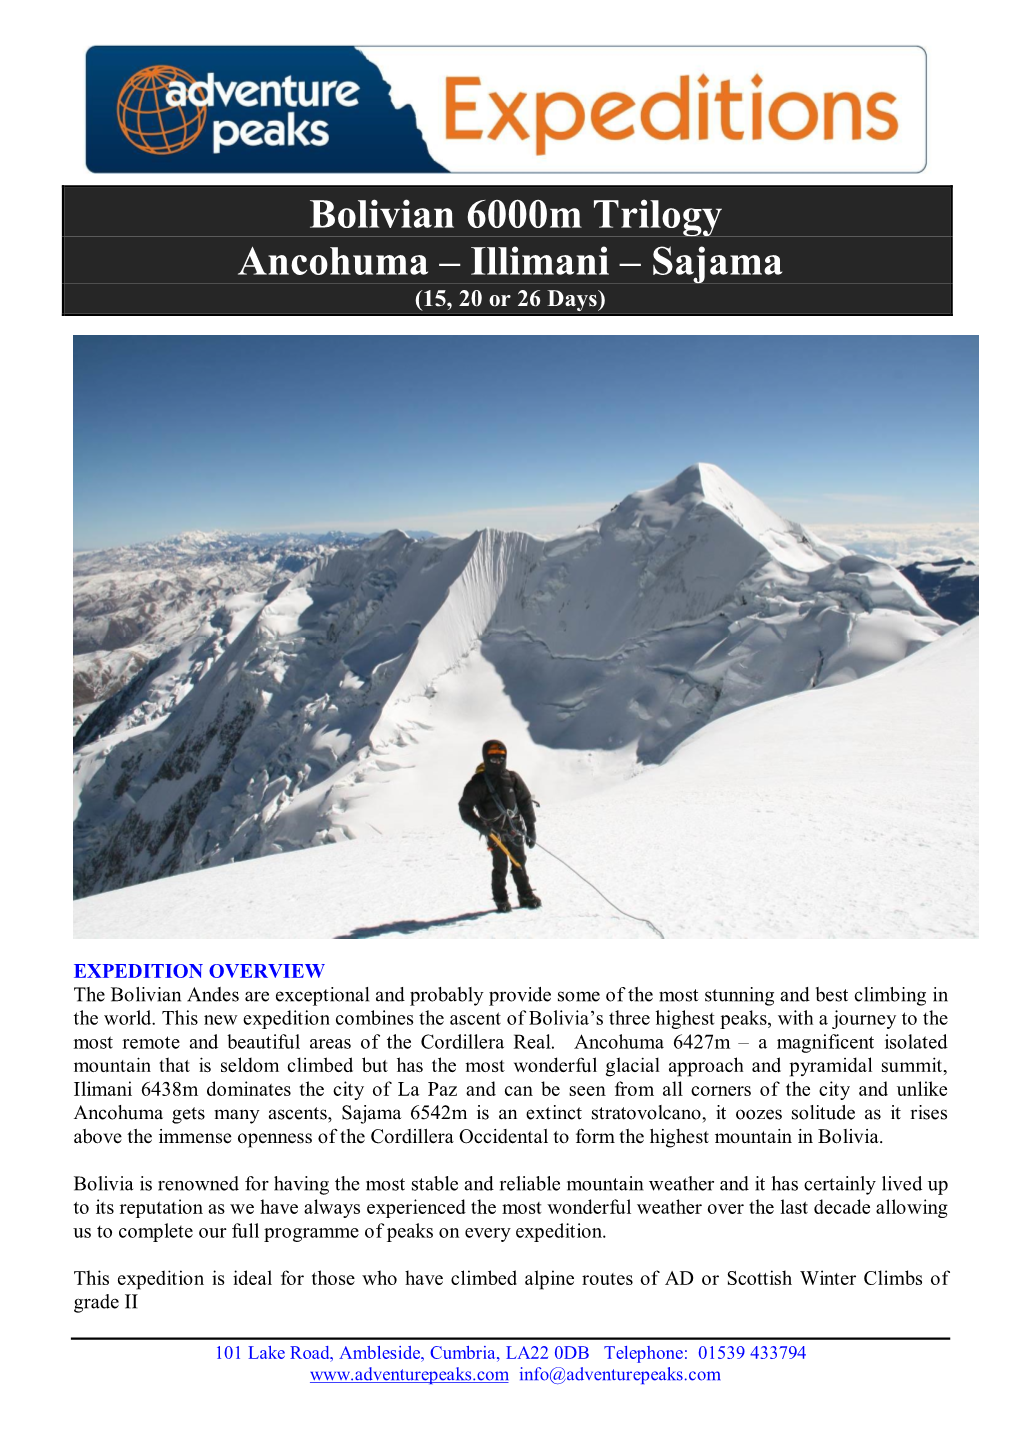 Bolivian 6000M Trilogy Ancohuma – Illimani – Sajama (15, 20 Or 26 Days)